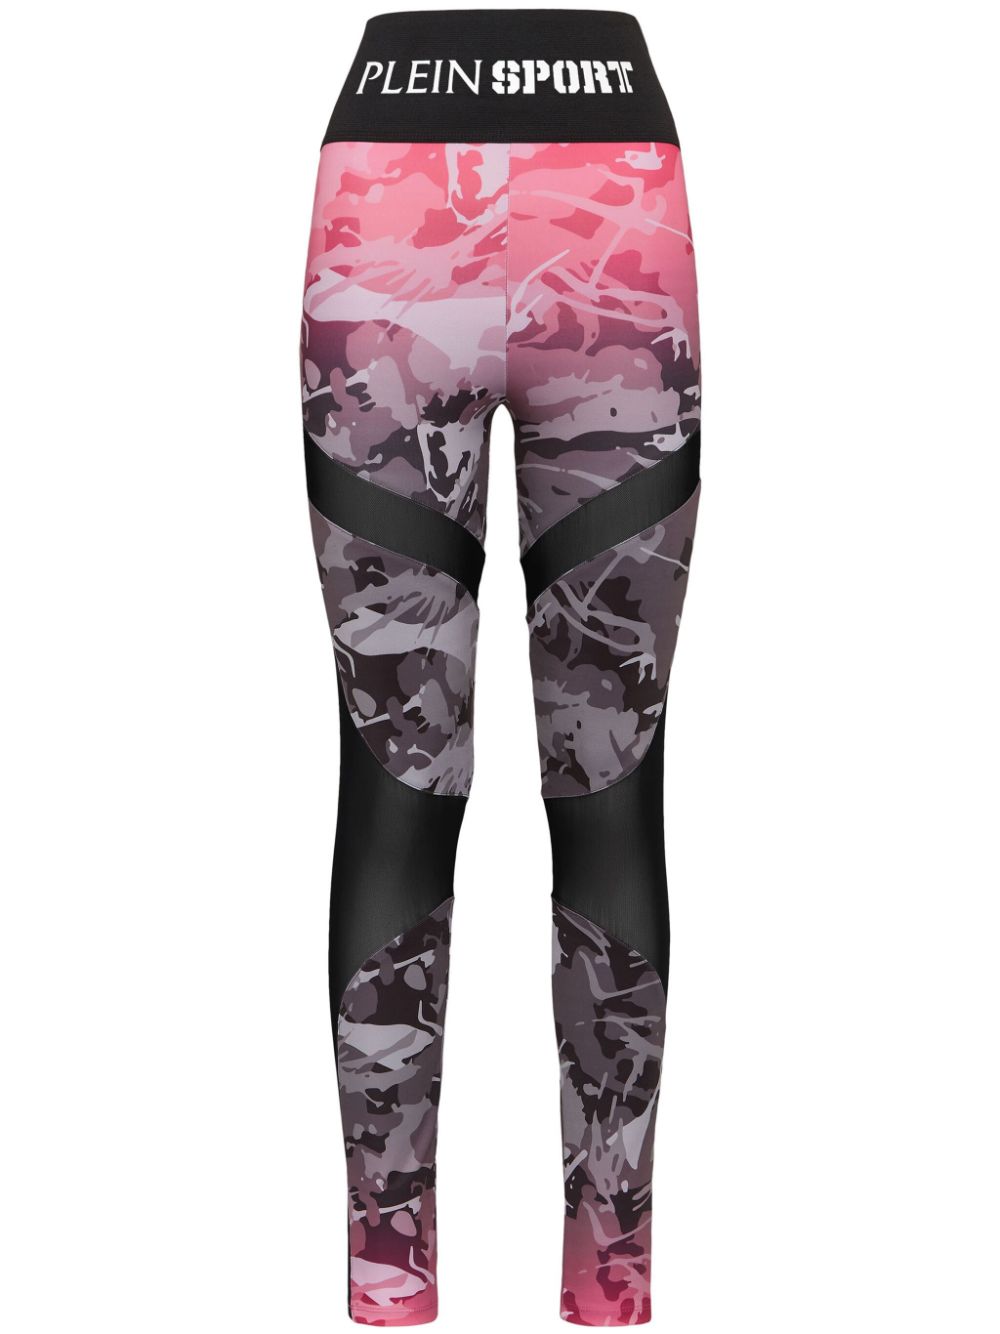 plein sport legging taille haute à motif camouflage - rose